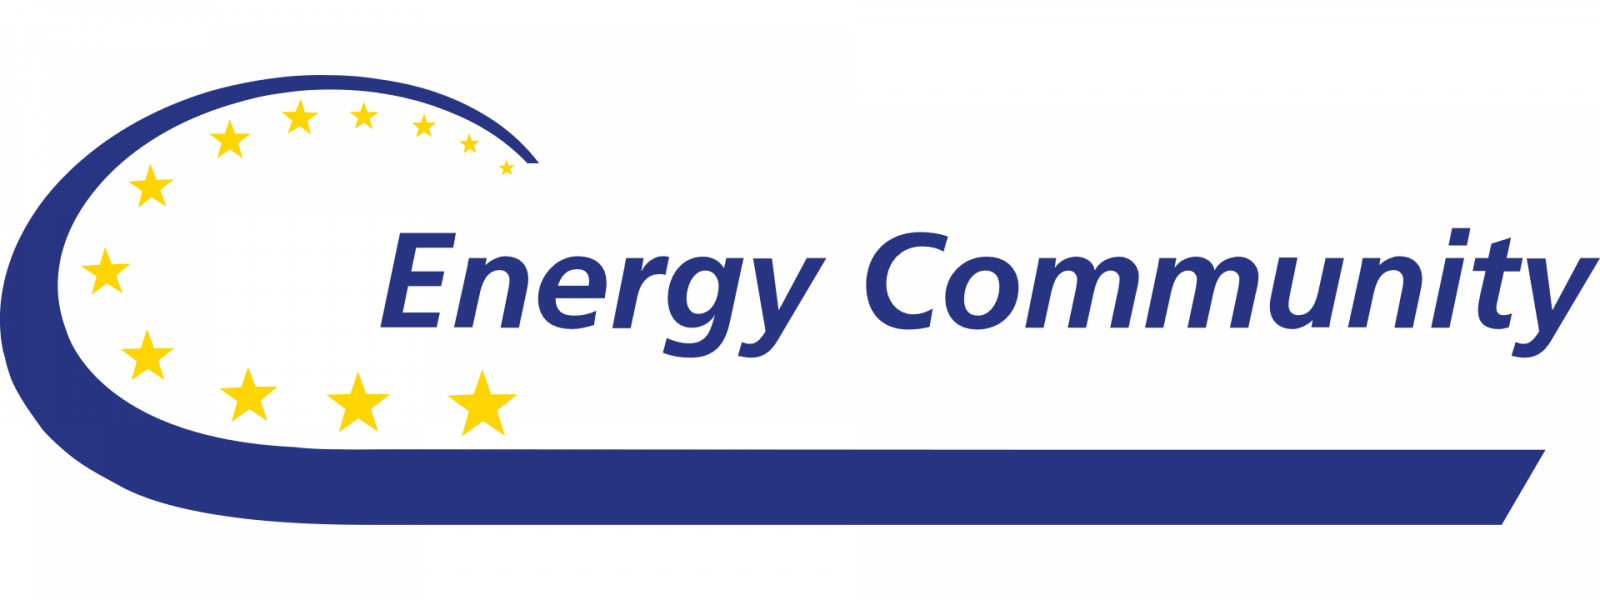 Energy Comunity Secretariat